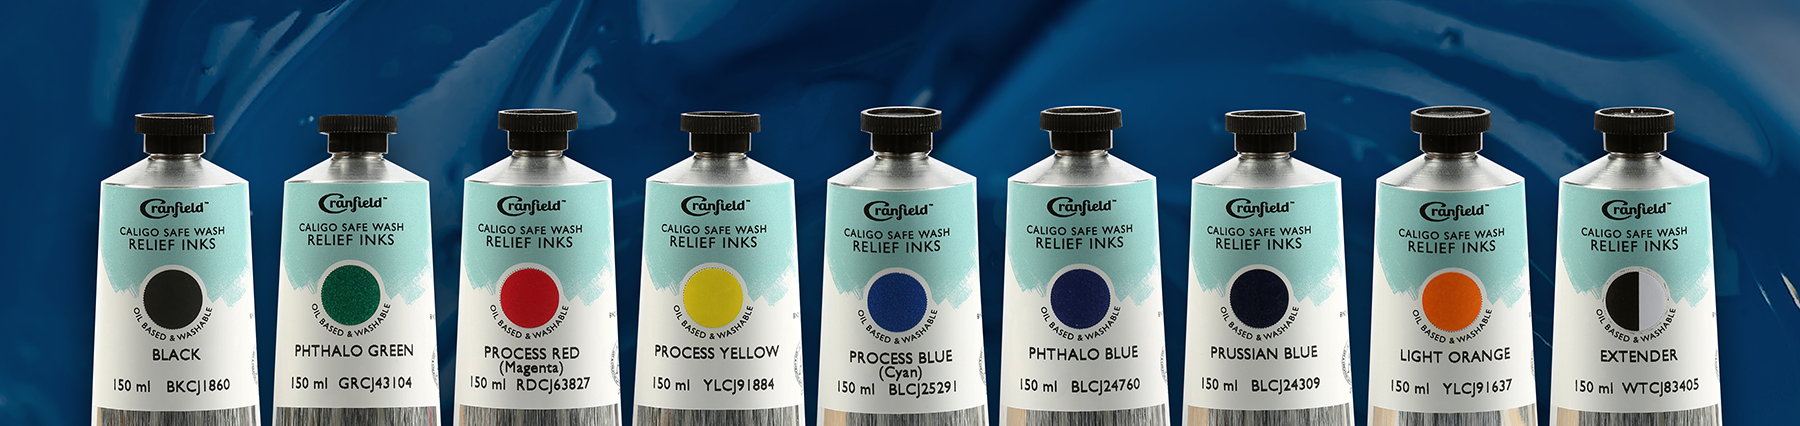 Cranfield Caligo Safe Wash Relief Printing Ink Process Blue Cyan 75g tube